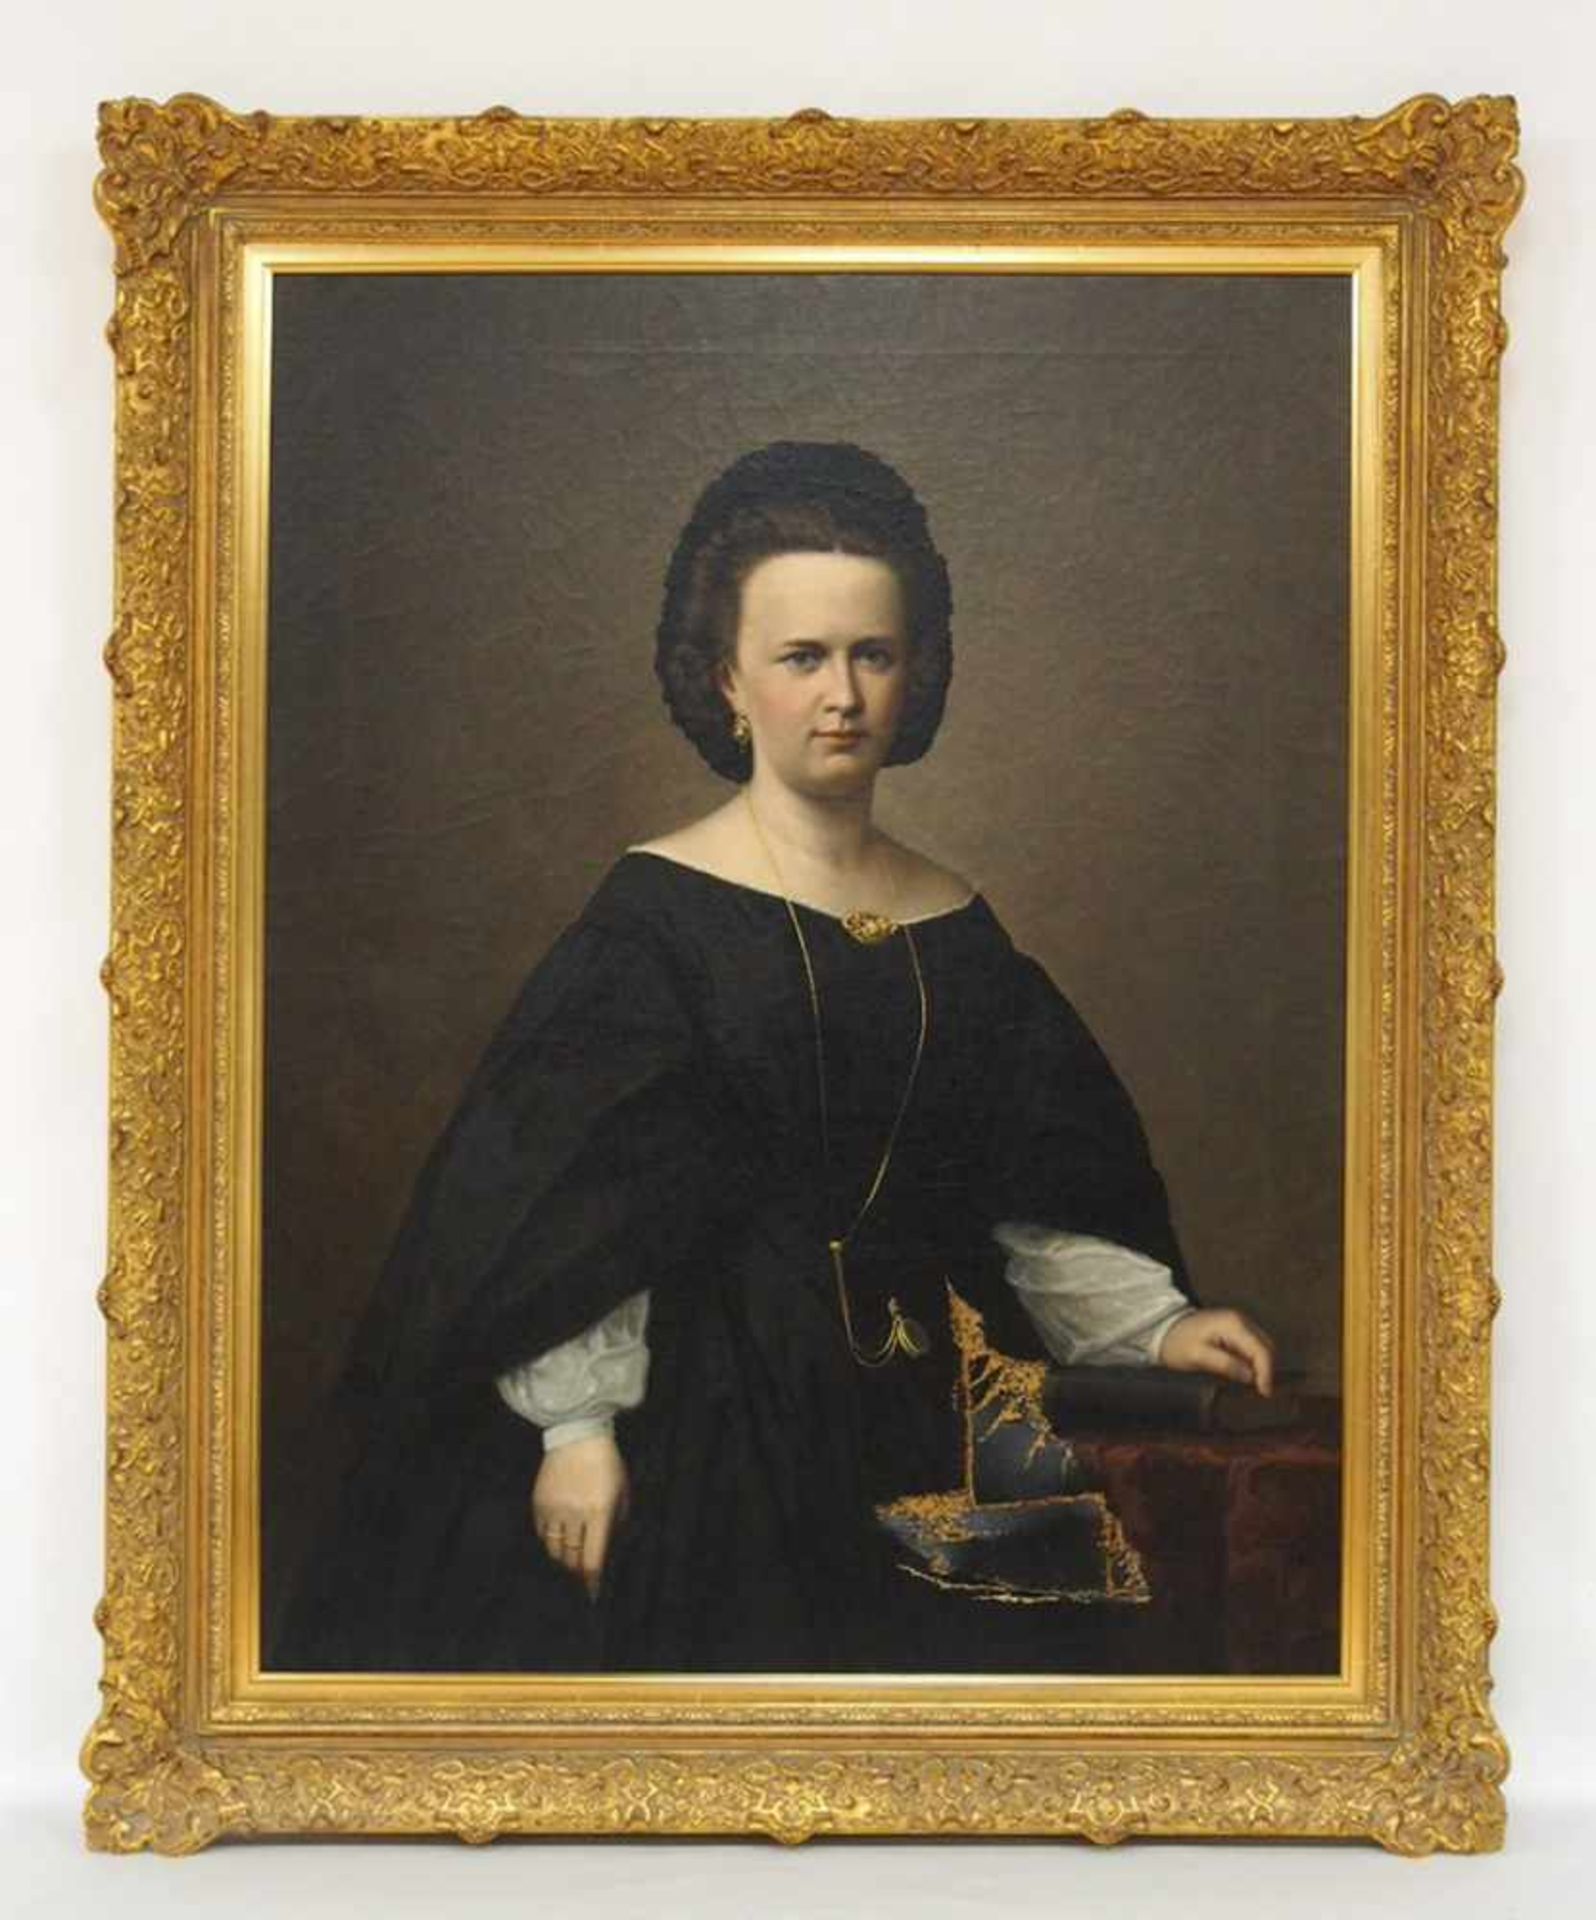 DEUTSCHER MEISTER19. Jh.DamenporträtÖl auf Leinwand, 98 x 78 cm, Rahmen (Riss in der Leinwand)- - - - Bild 2 aus 2